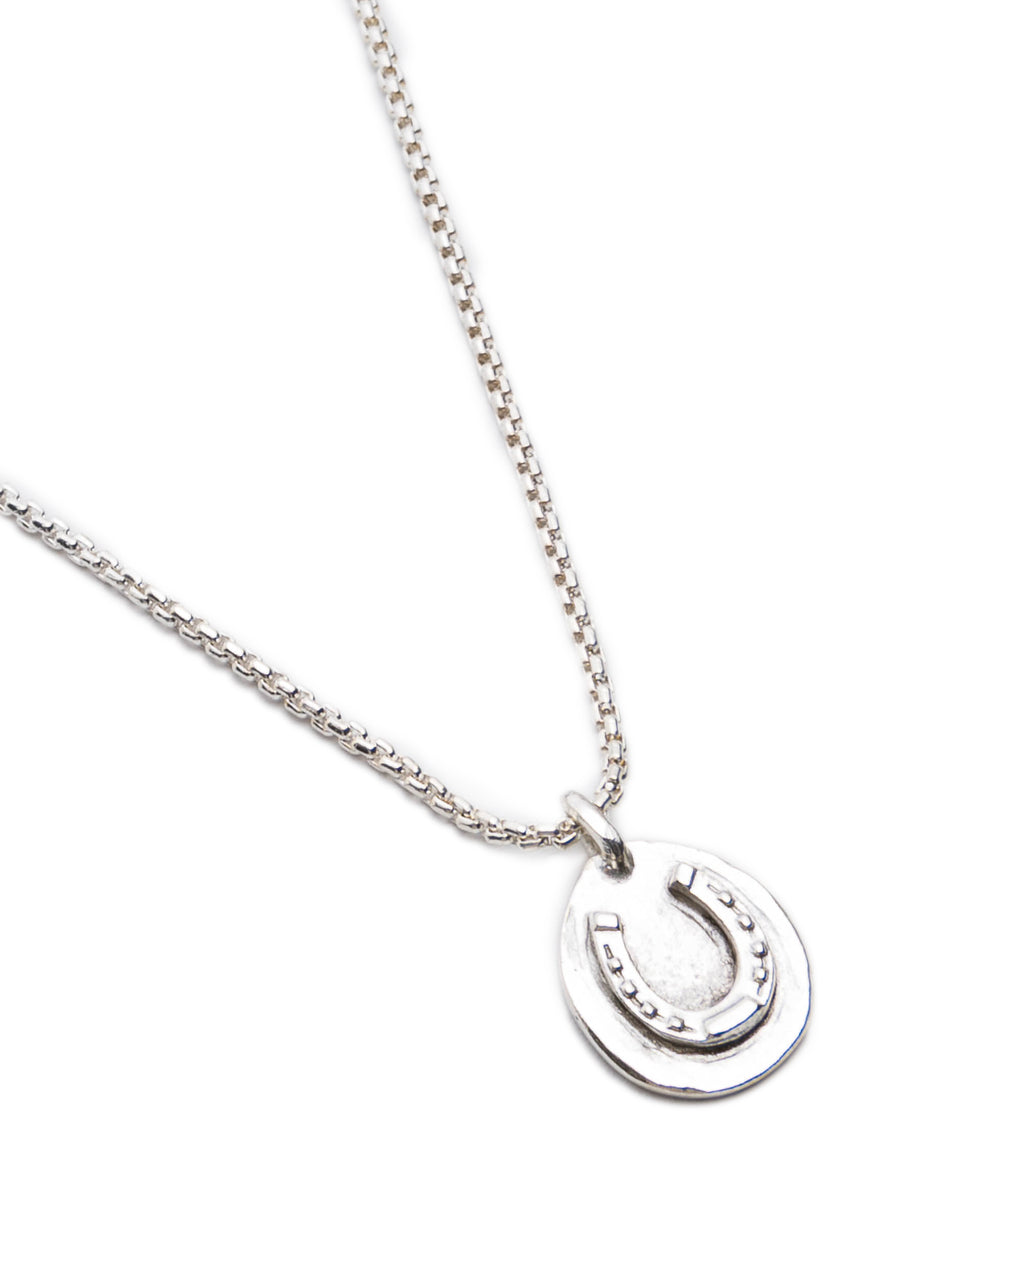 Silver “Lucky” Horseshoe Necklace